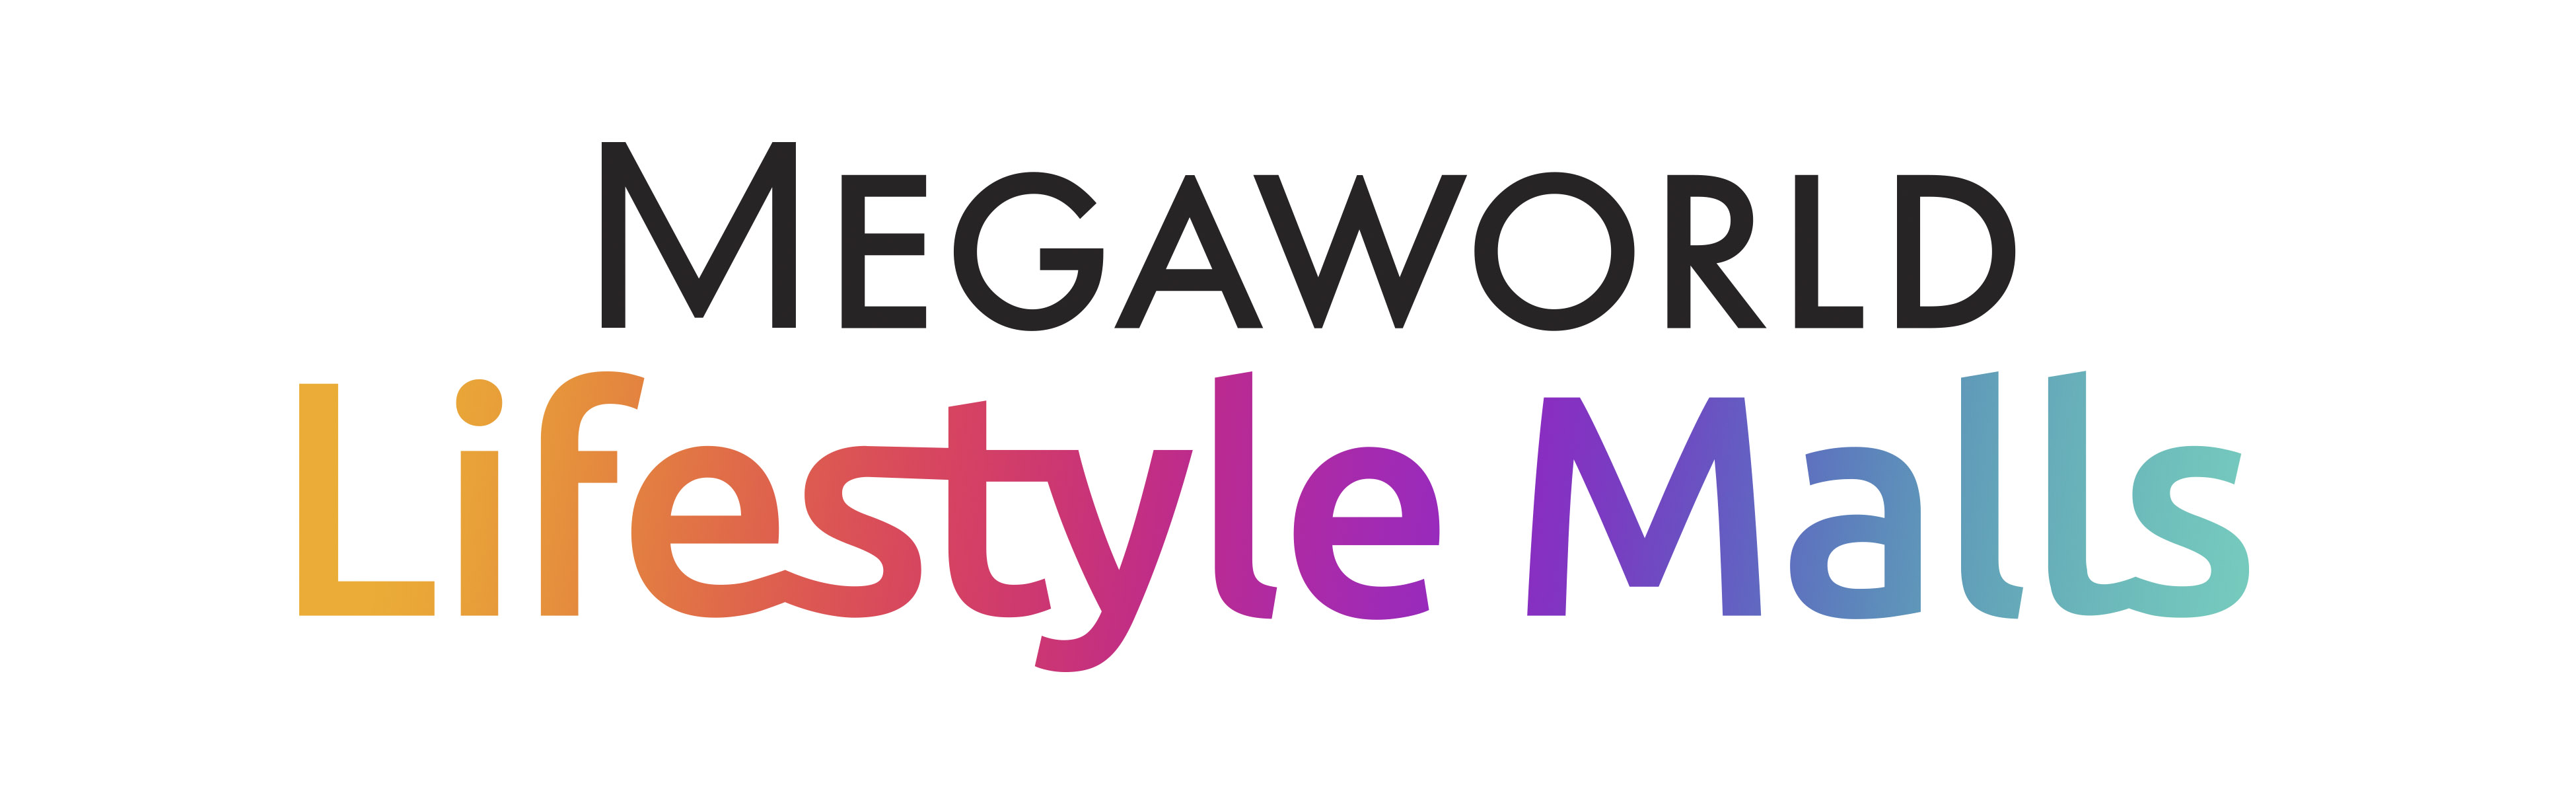 Megaworld Lifestyle Malls New Logo